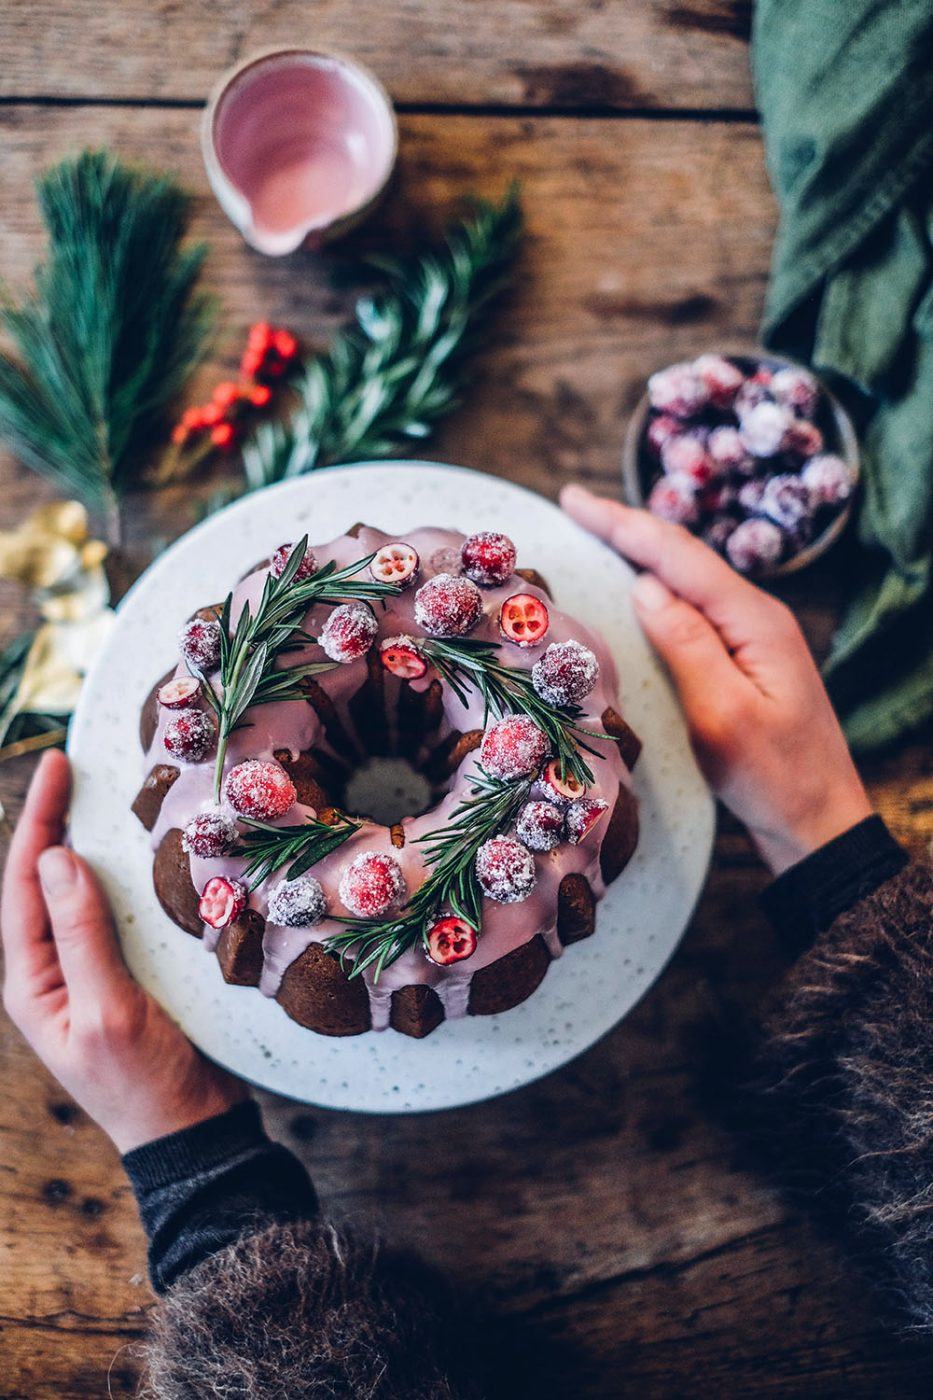 Gluten-free Cranberry-Christmas Bundt Cake